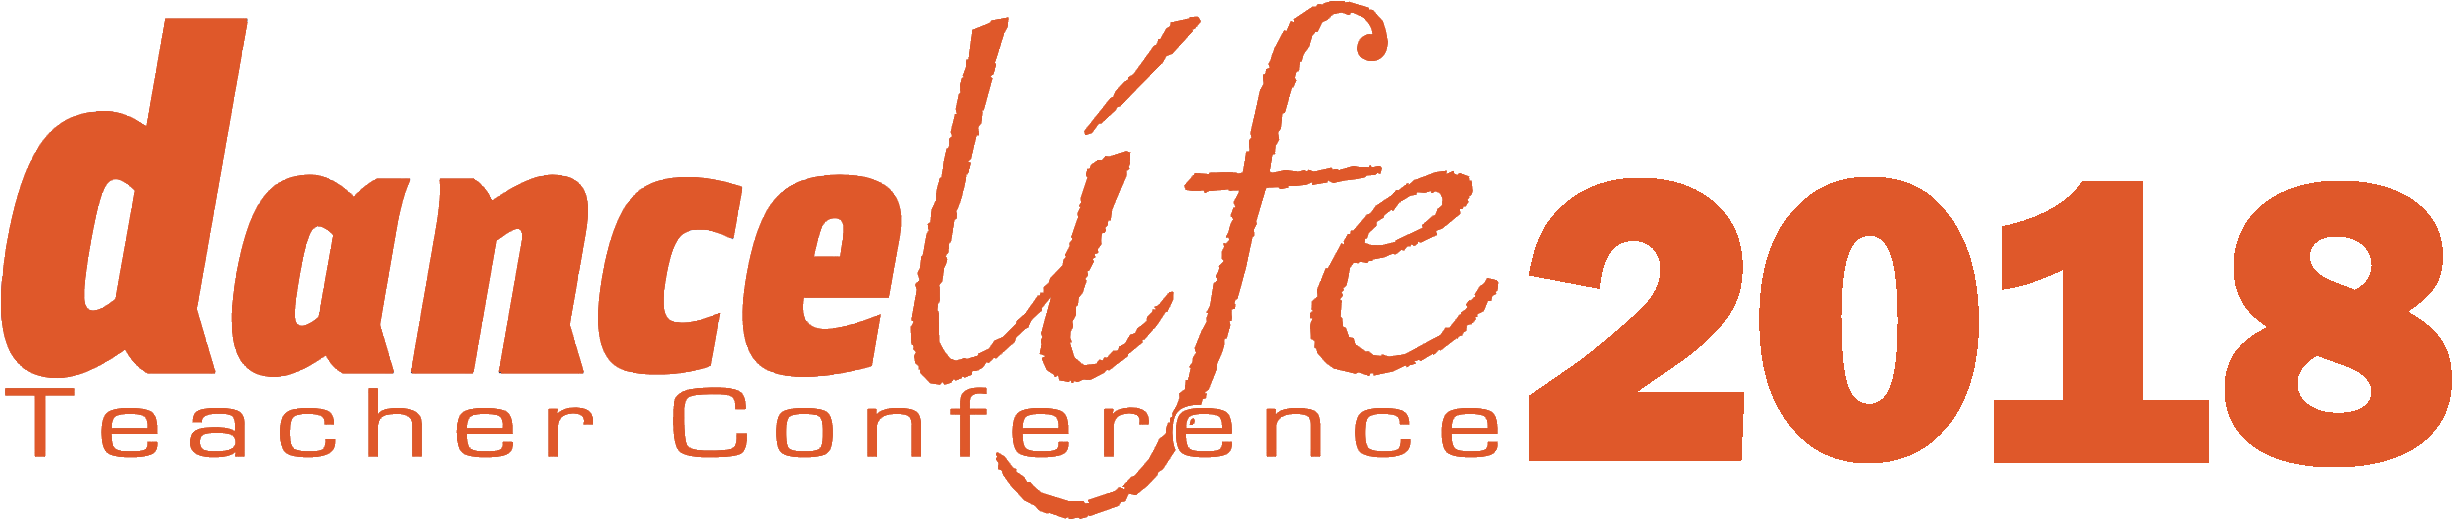 Dltc Logo 2018 Orange - Dance Life Teacher Conference (2468x518)